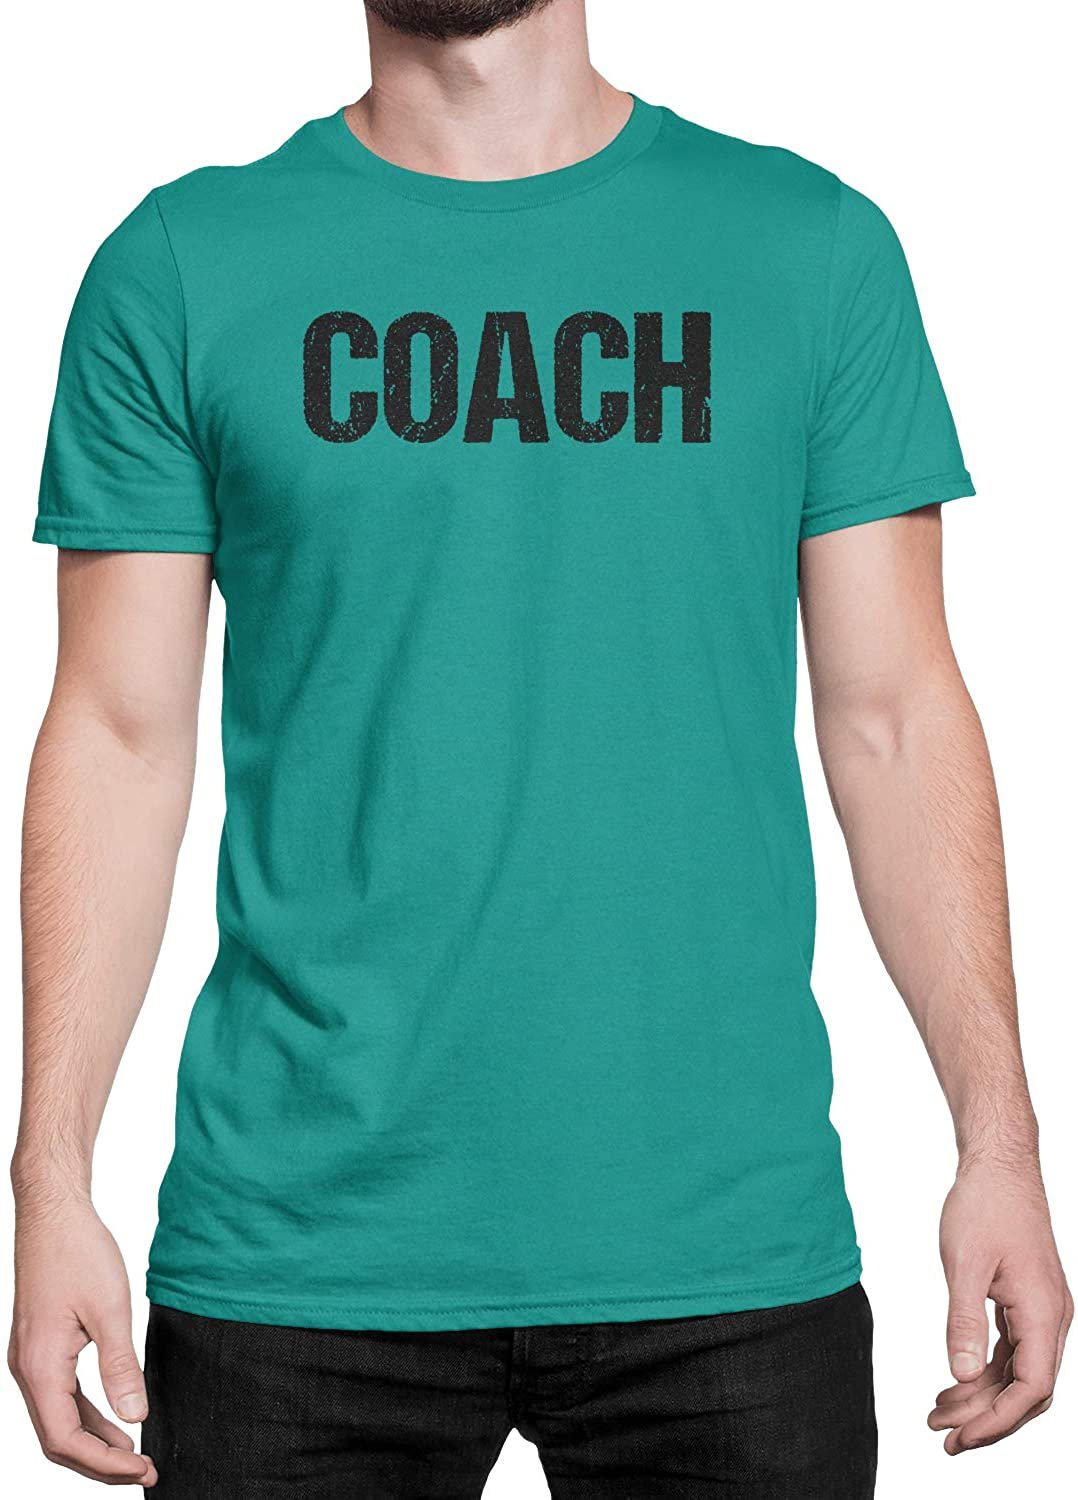 Coach T-Shirt Sports Coaching Tee Shirt (Aqua & Black, Distressed)